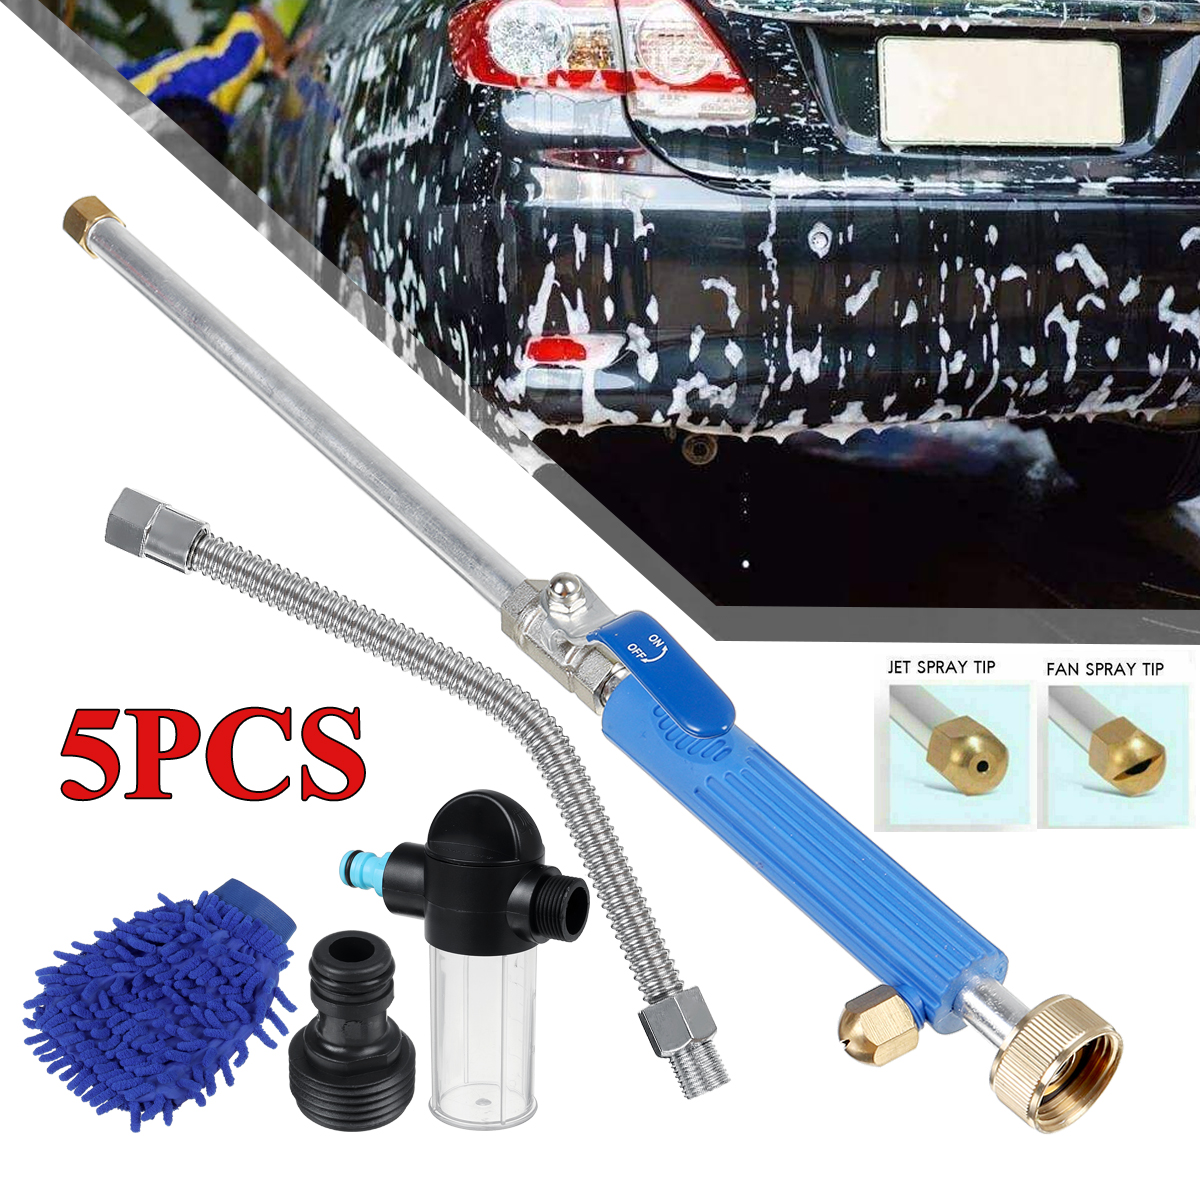 5pcs-High-Pressure-Power-Car-Water-Washer-Nozzle-Spray-Guns-For-Car-Washing-Flower-Irrigation-1760080-2